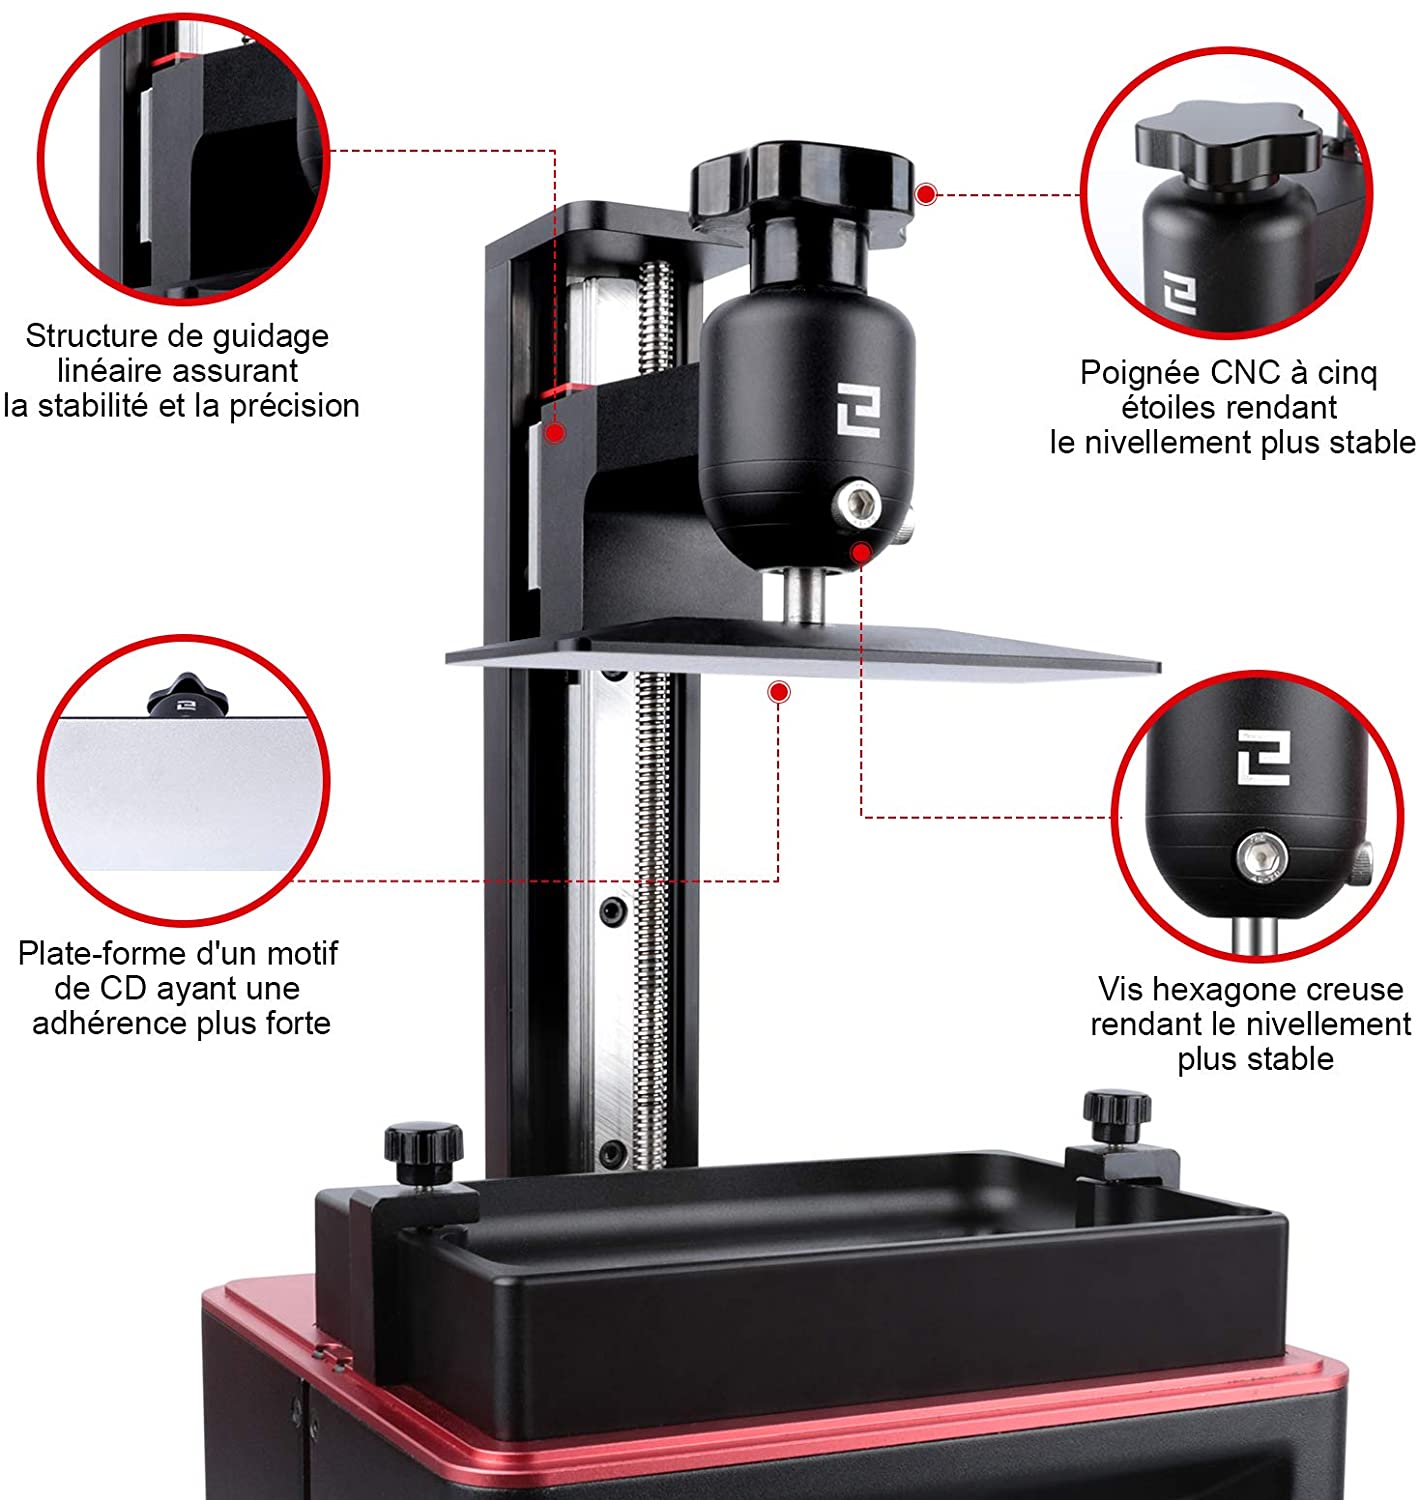 L'imprimante 3D résine ELEGOO Mars 2 Pro, 2K à 159.99 Stock EU